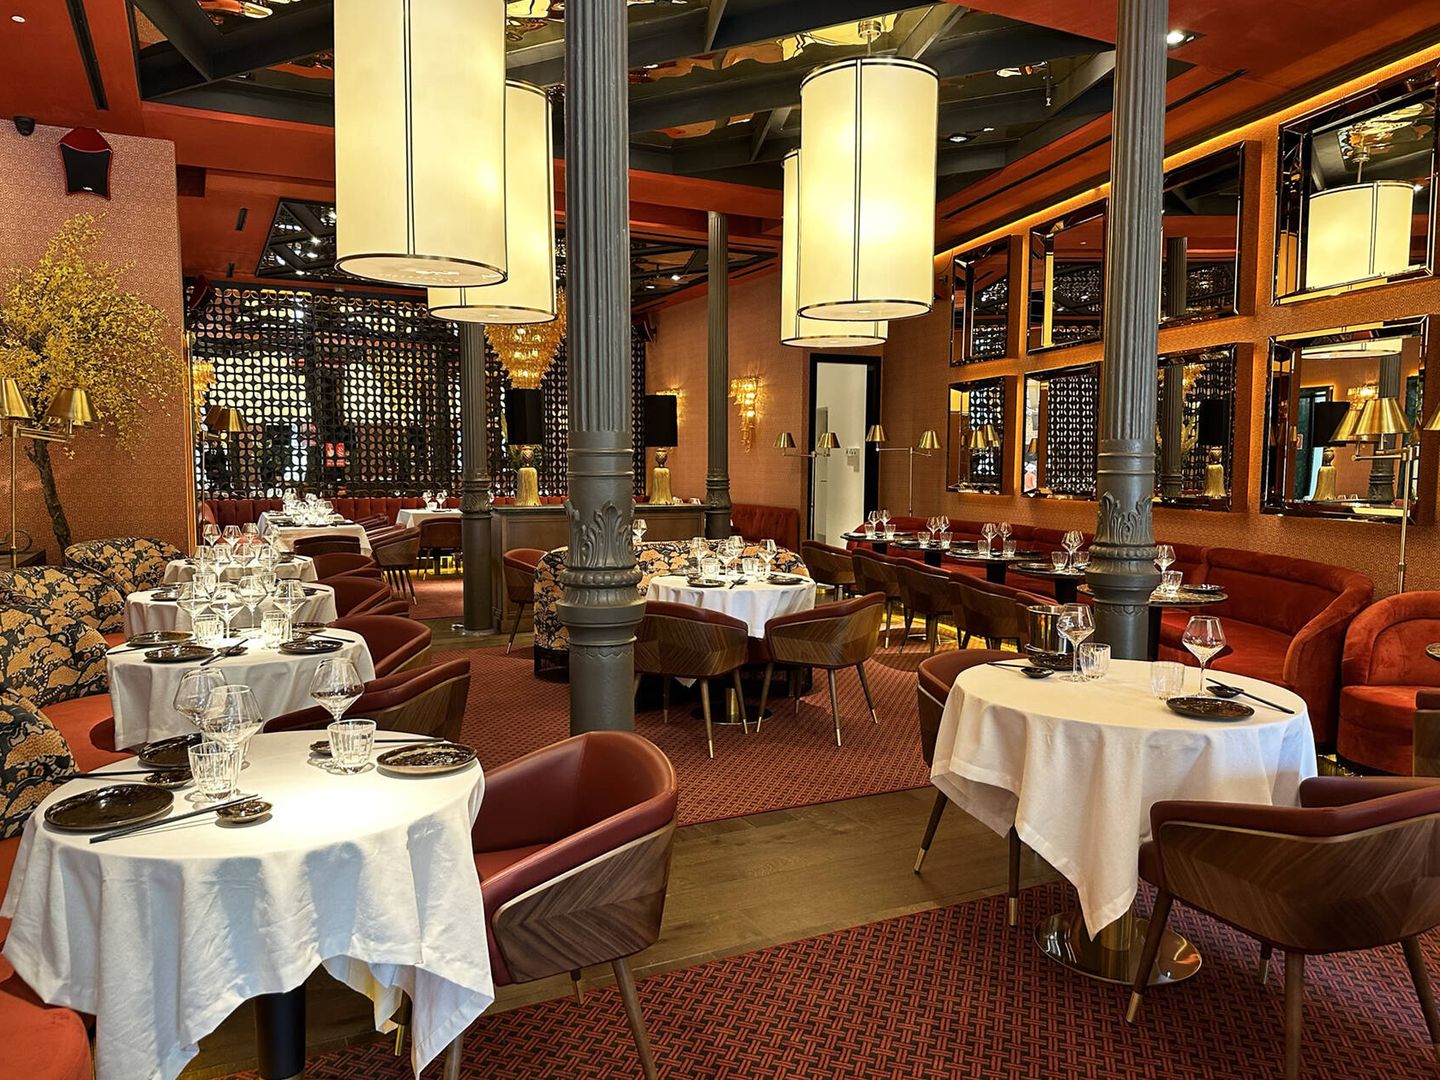 El restaurante Lelong, en el Hotel JW Marriott. (Rafael Ansón)